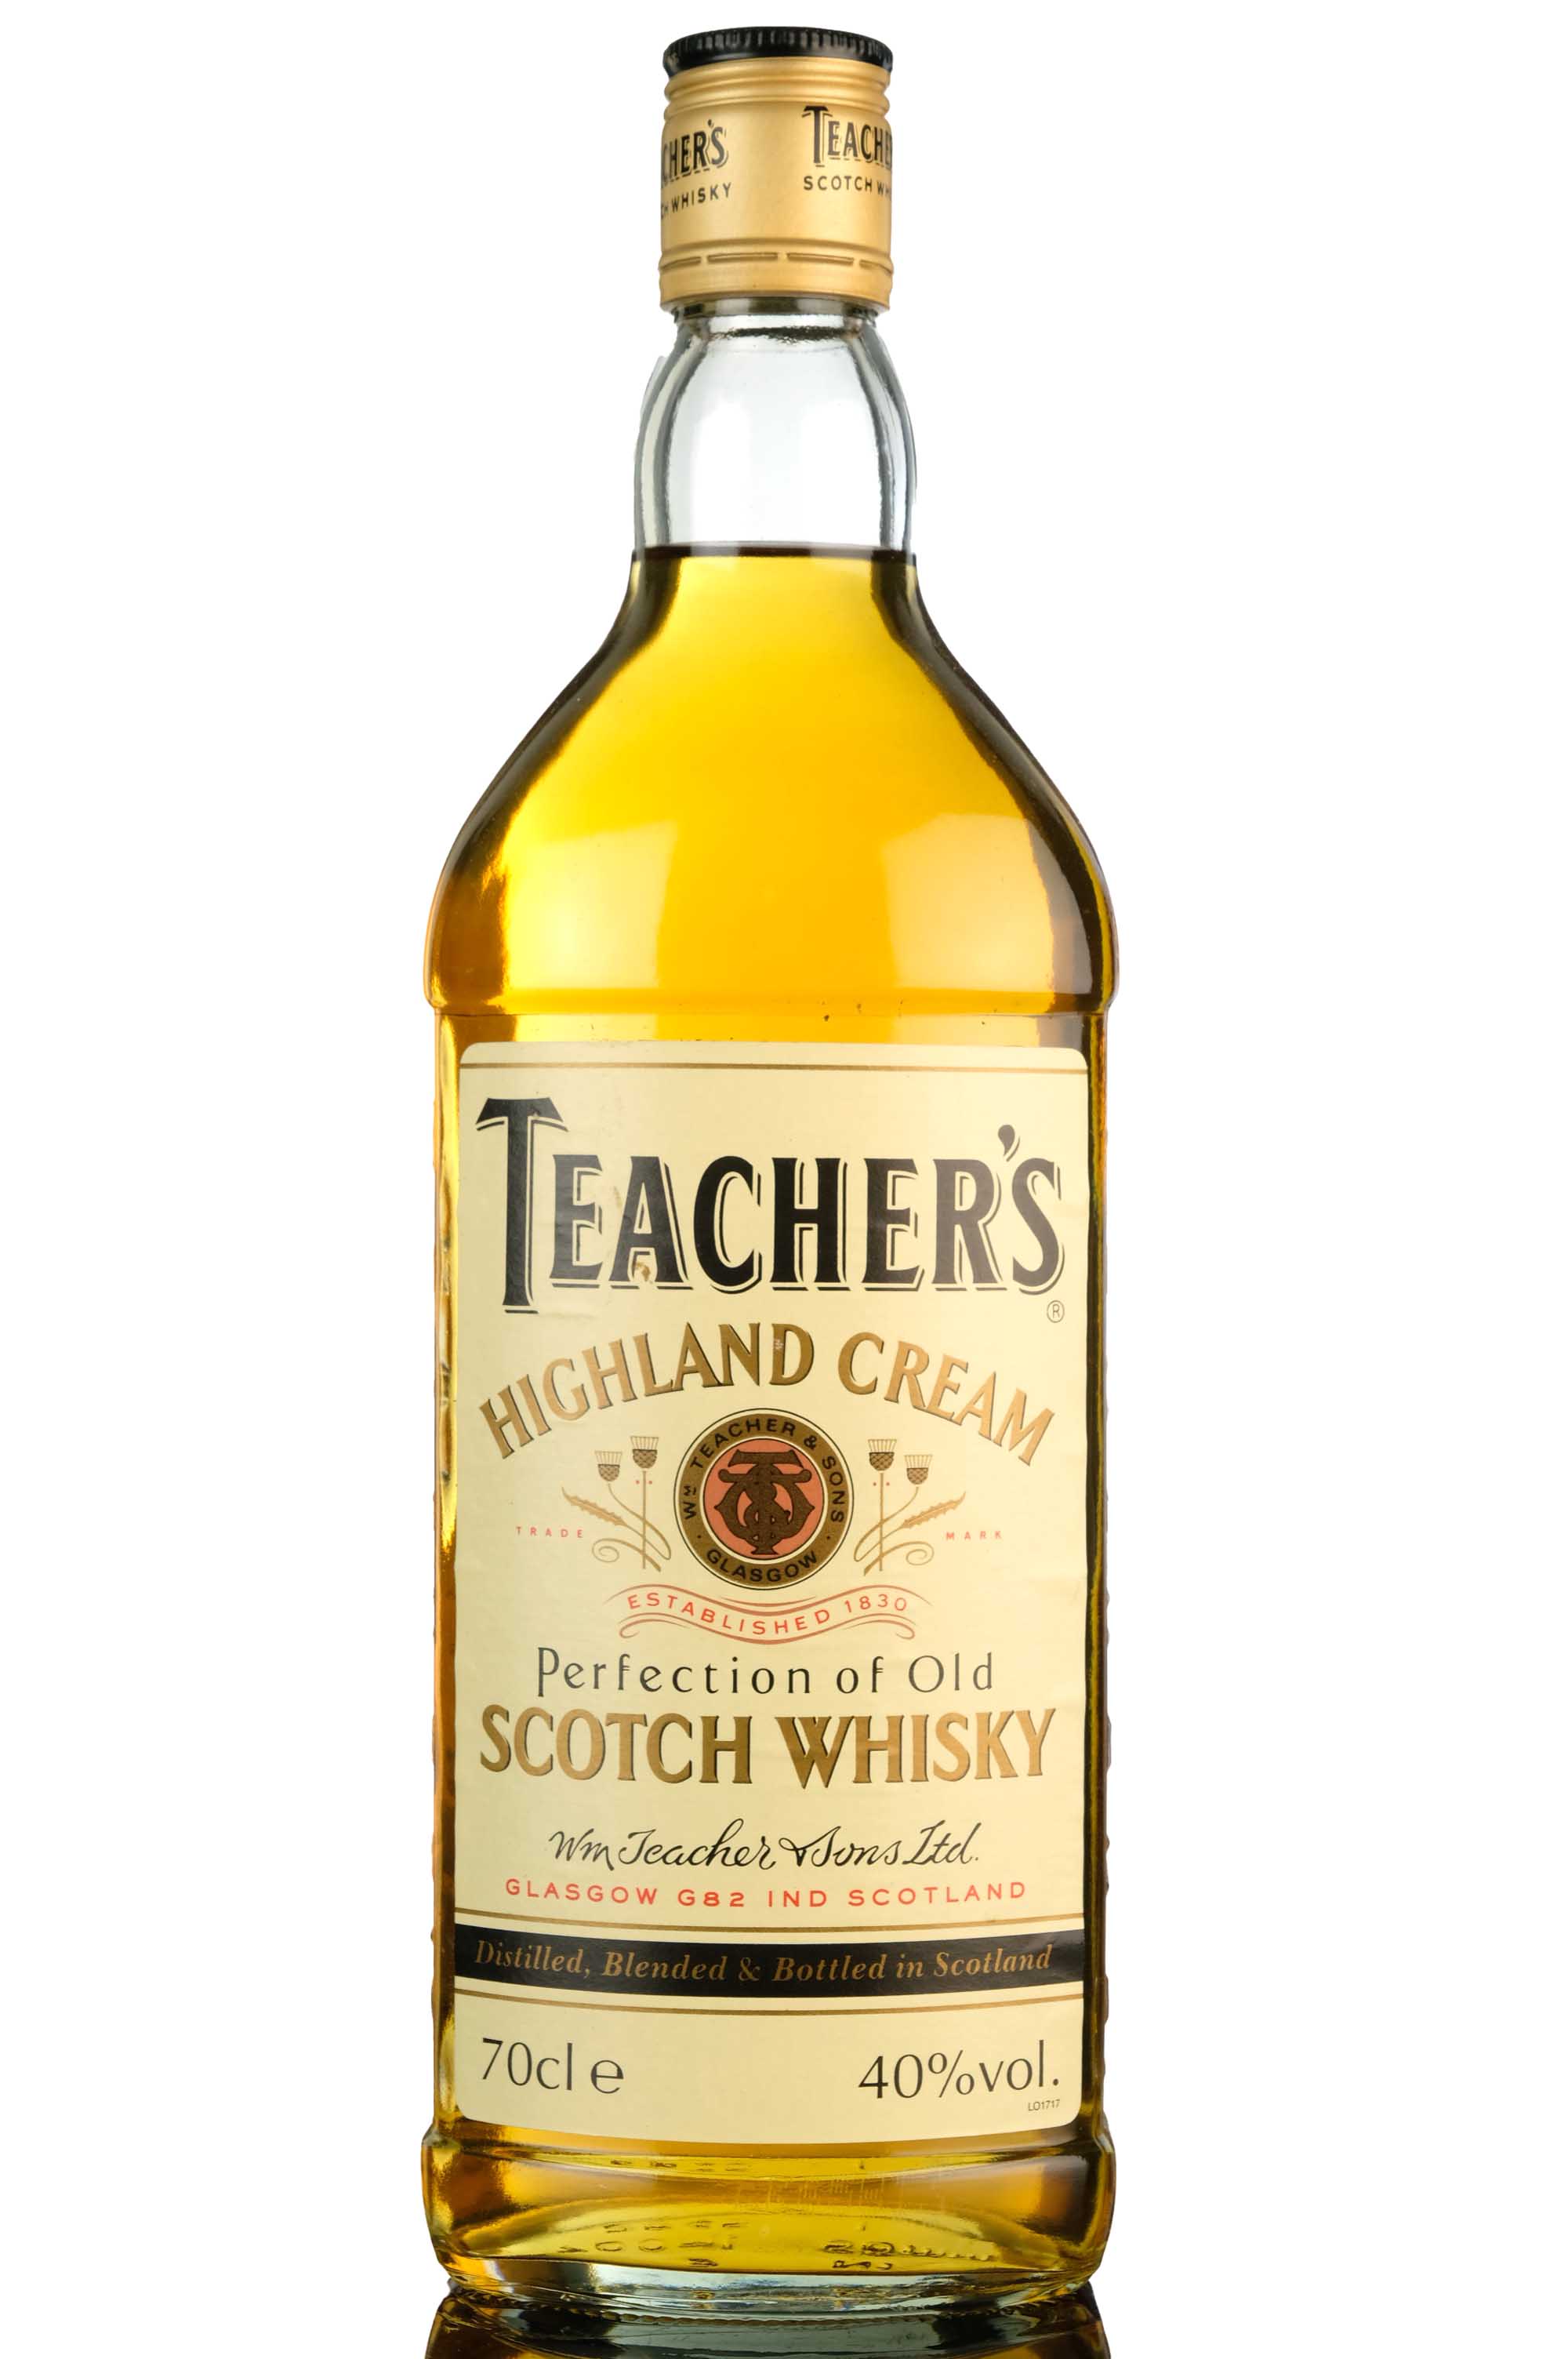 Teachers Highland Cream - 1990s